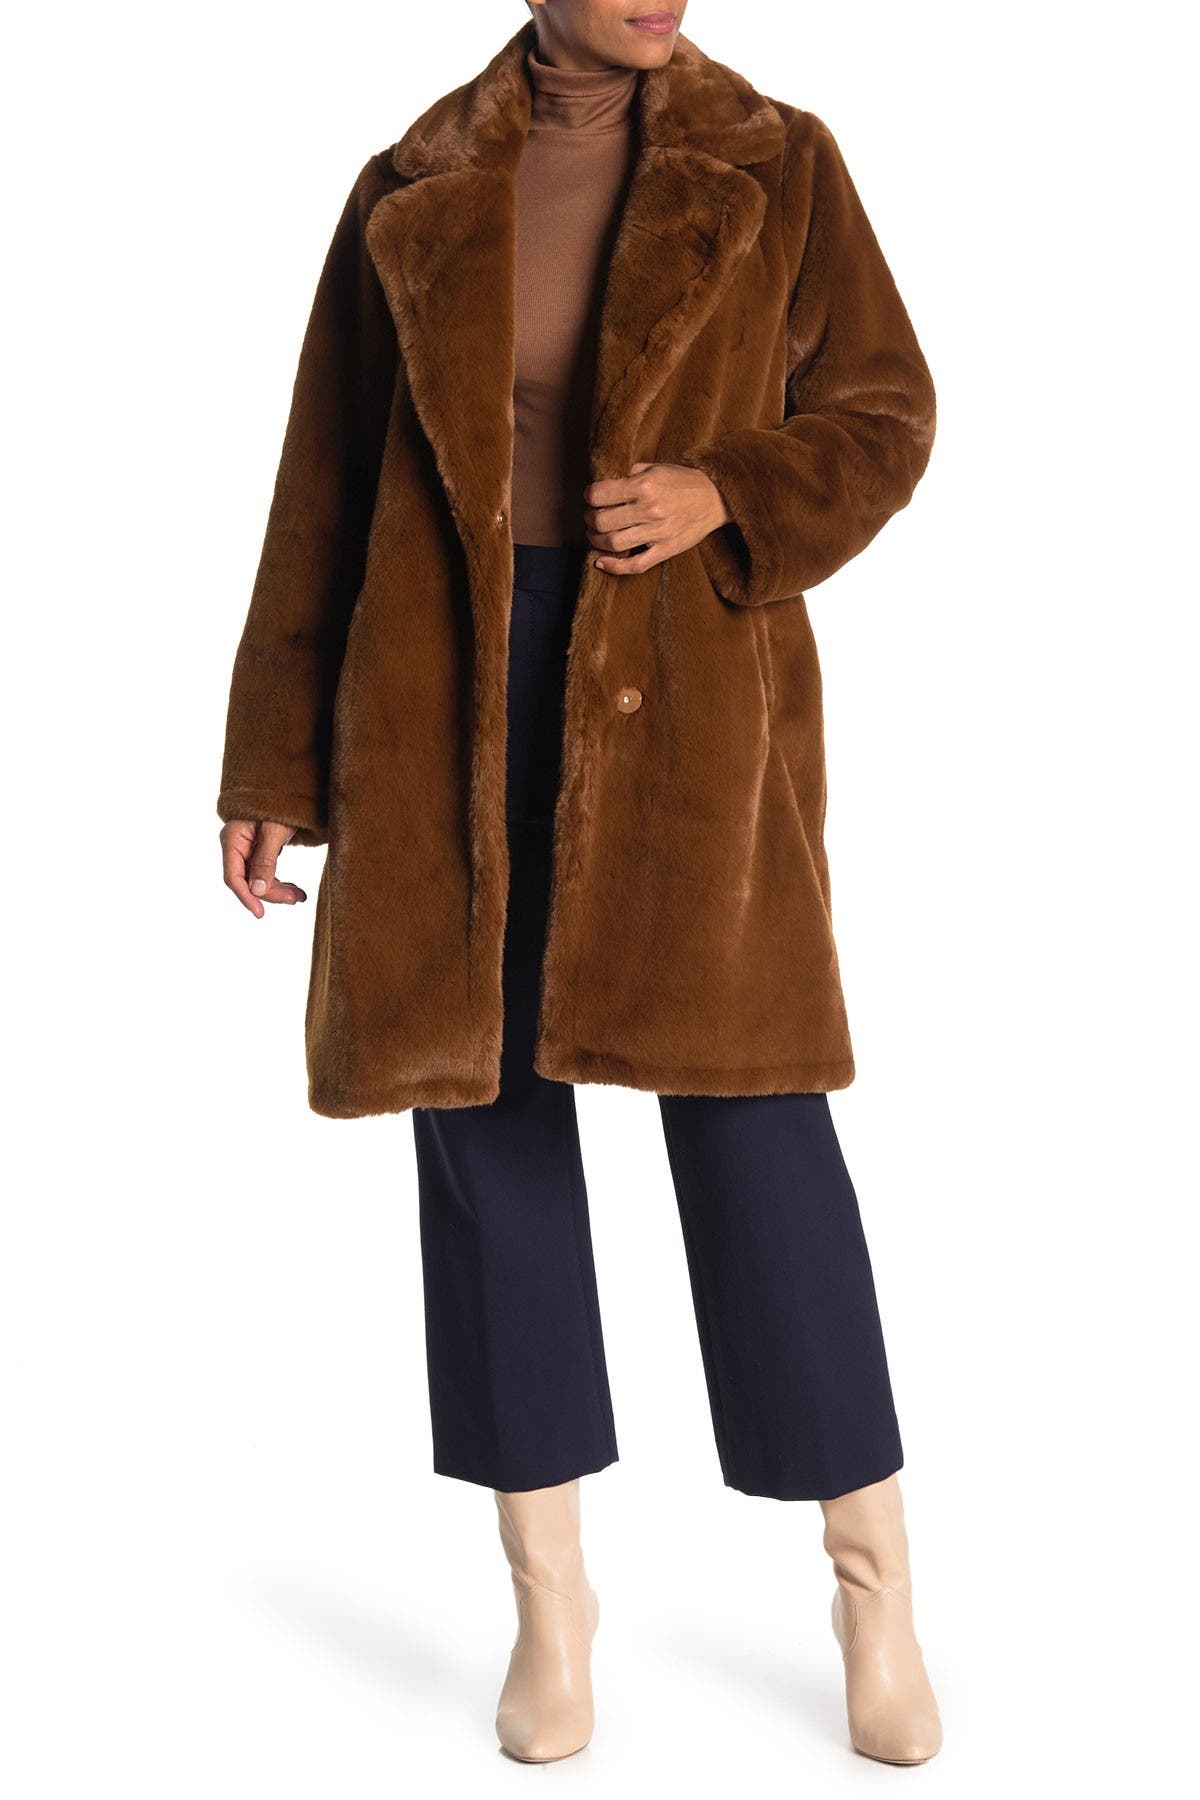 michael kors teddy coat